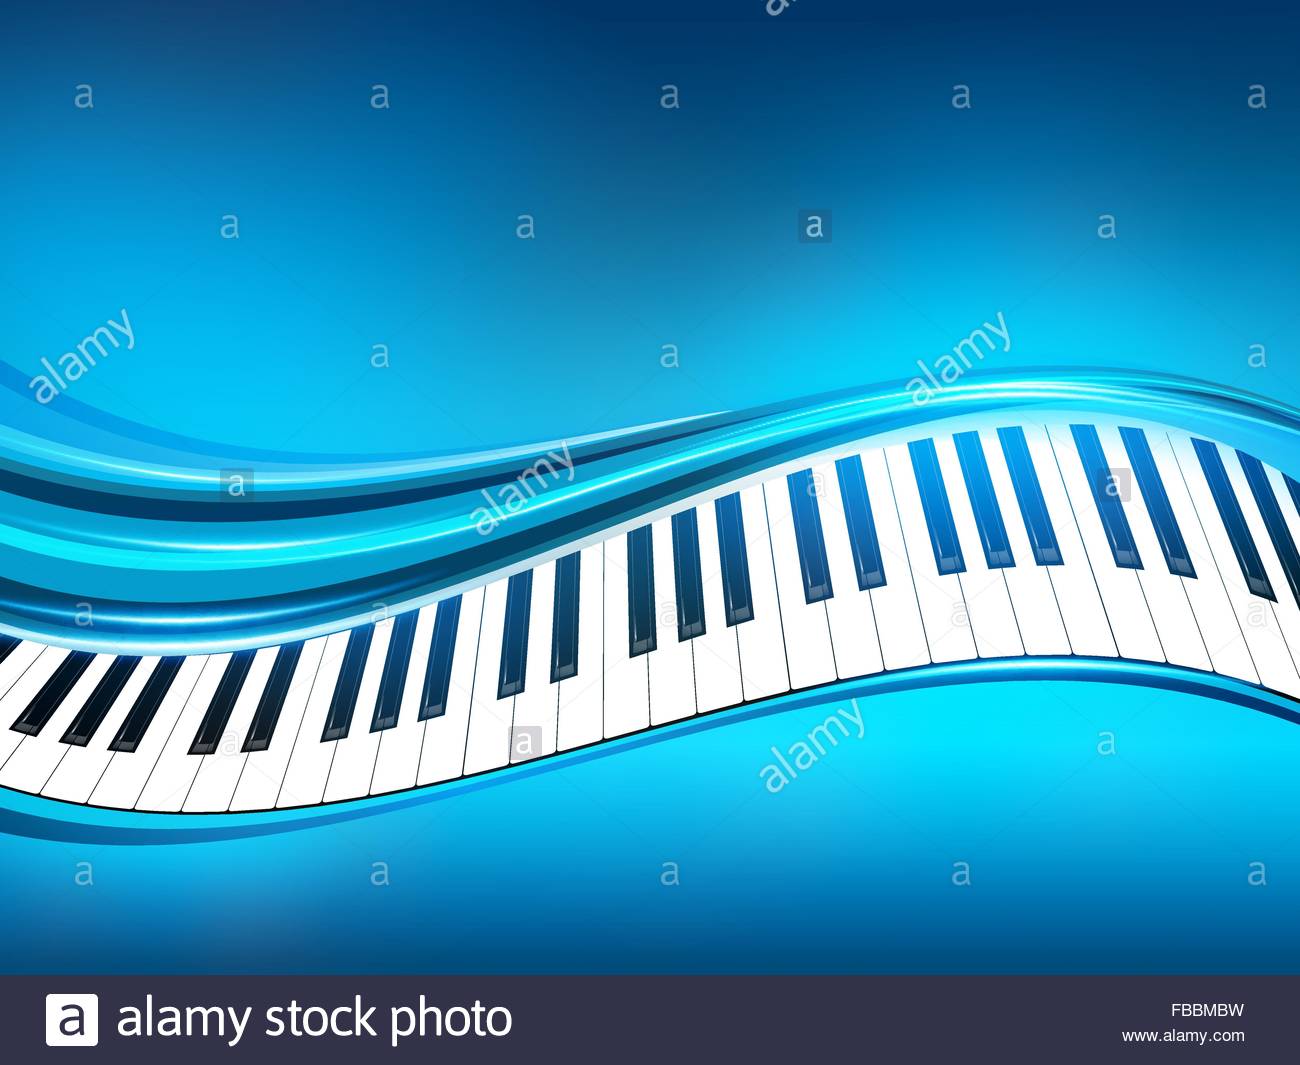 Piano Background Stock Photos Image